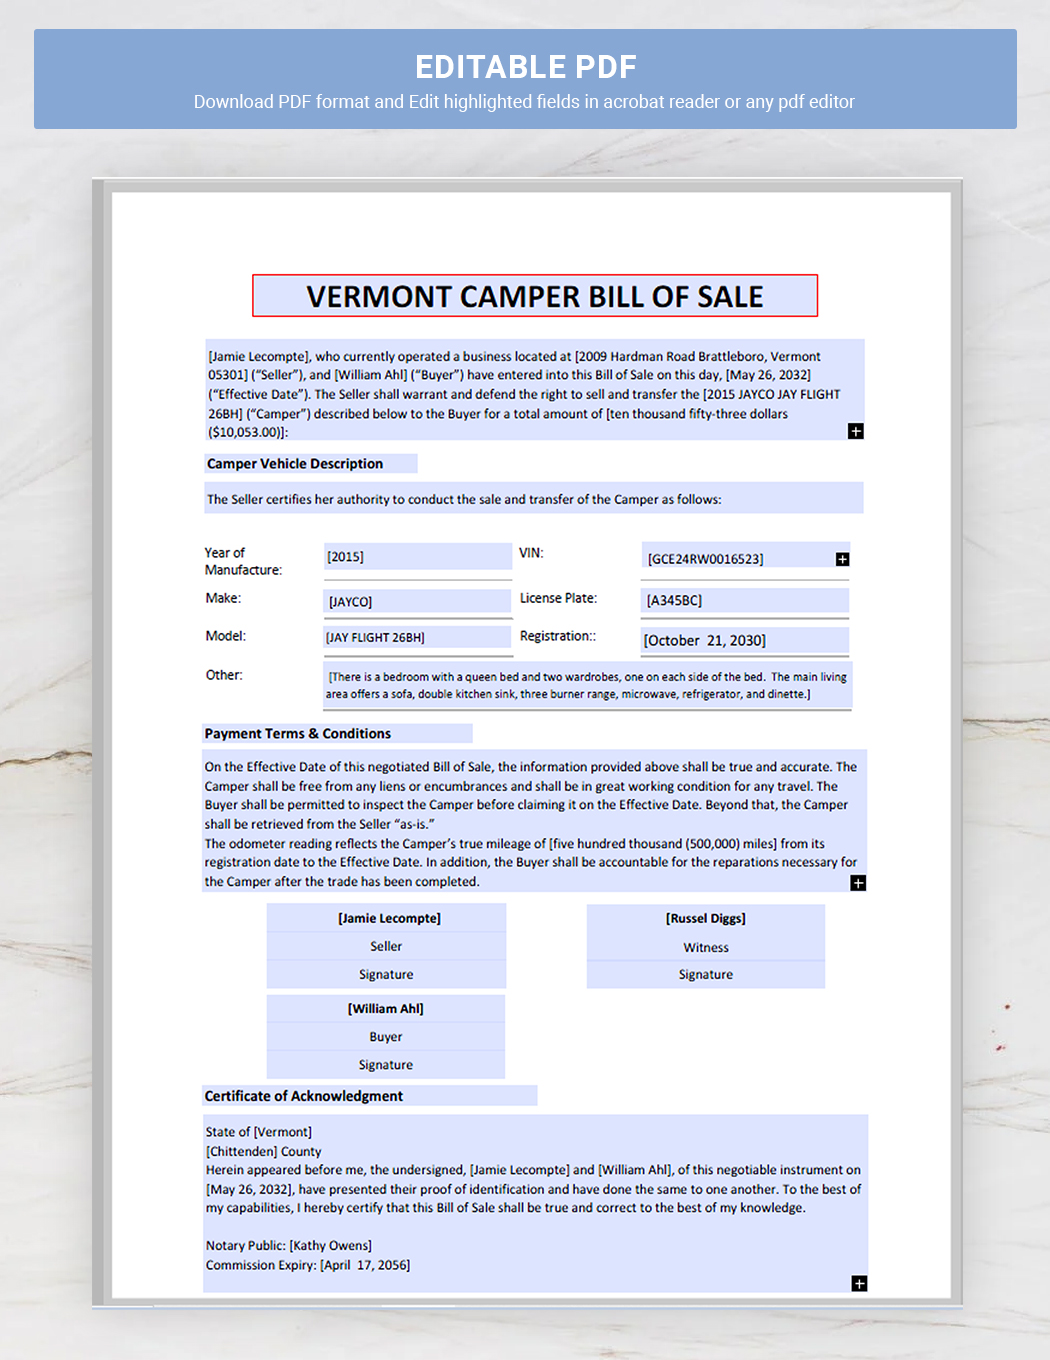 Vermont Camper Bill of Sale Template